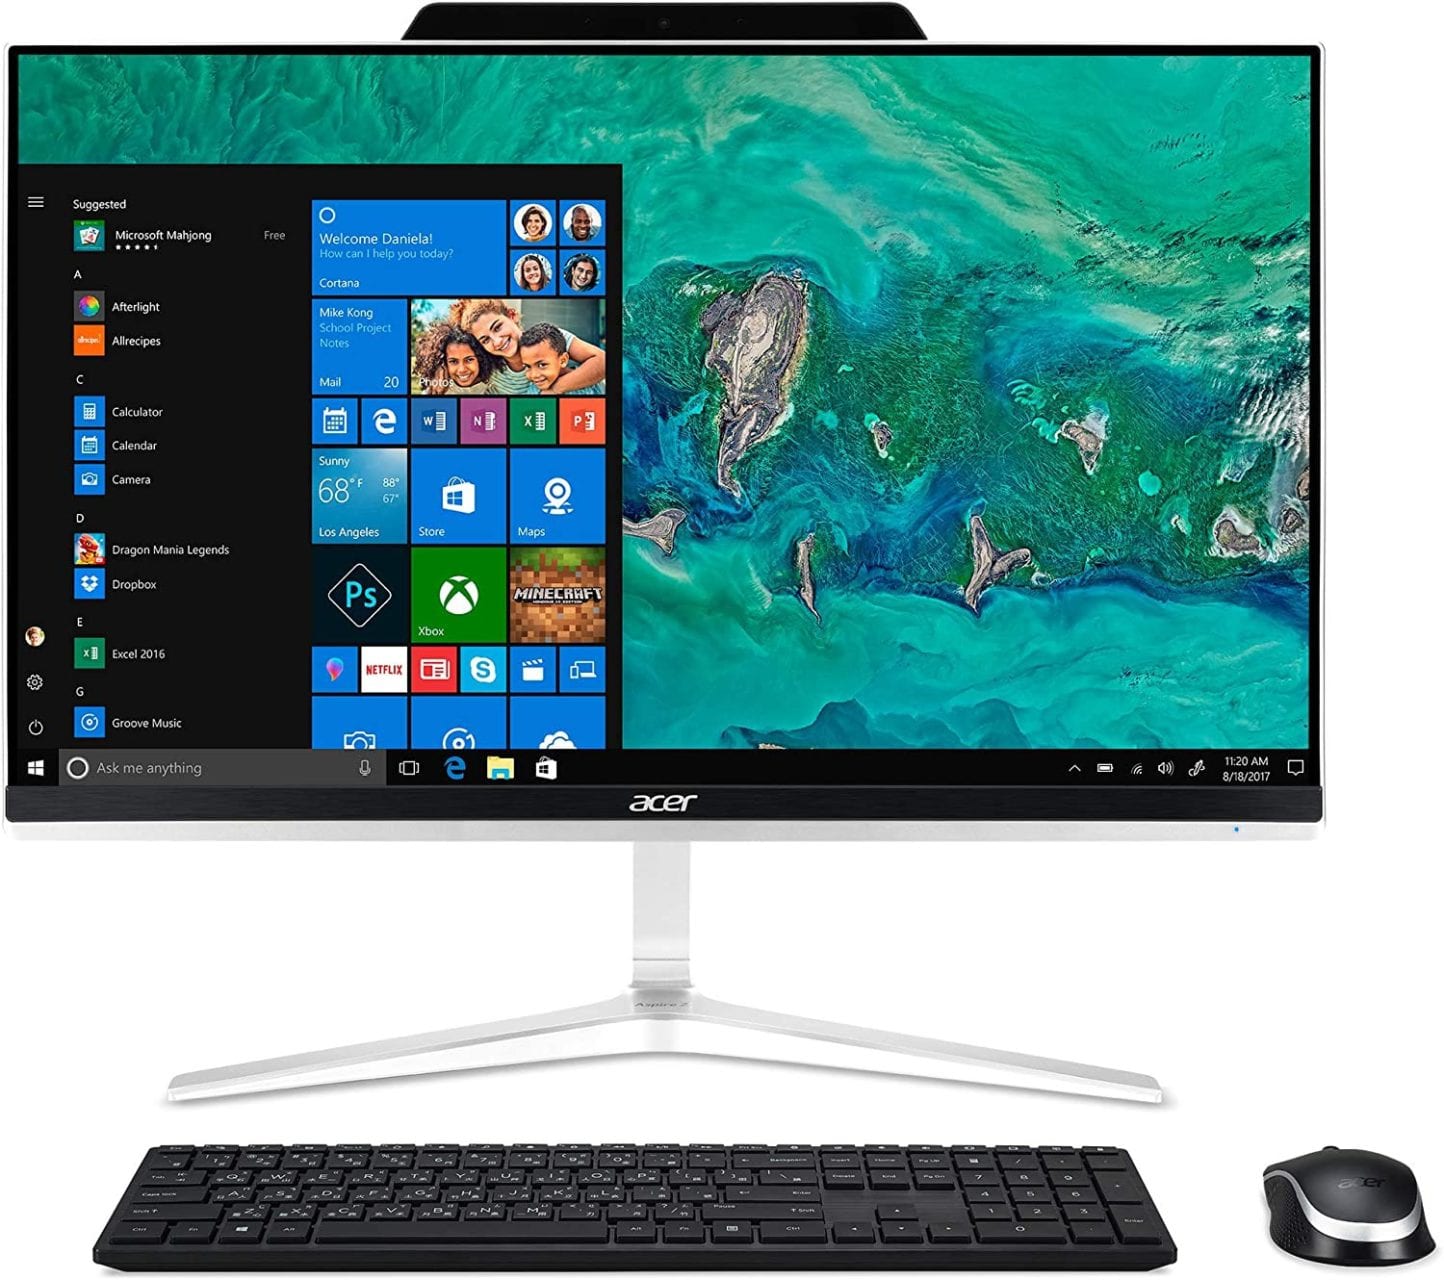 Acer Aspire Z24 Best All-in-One Computer Under 1,000